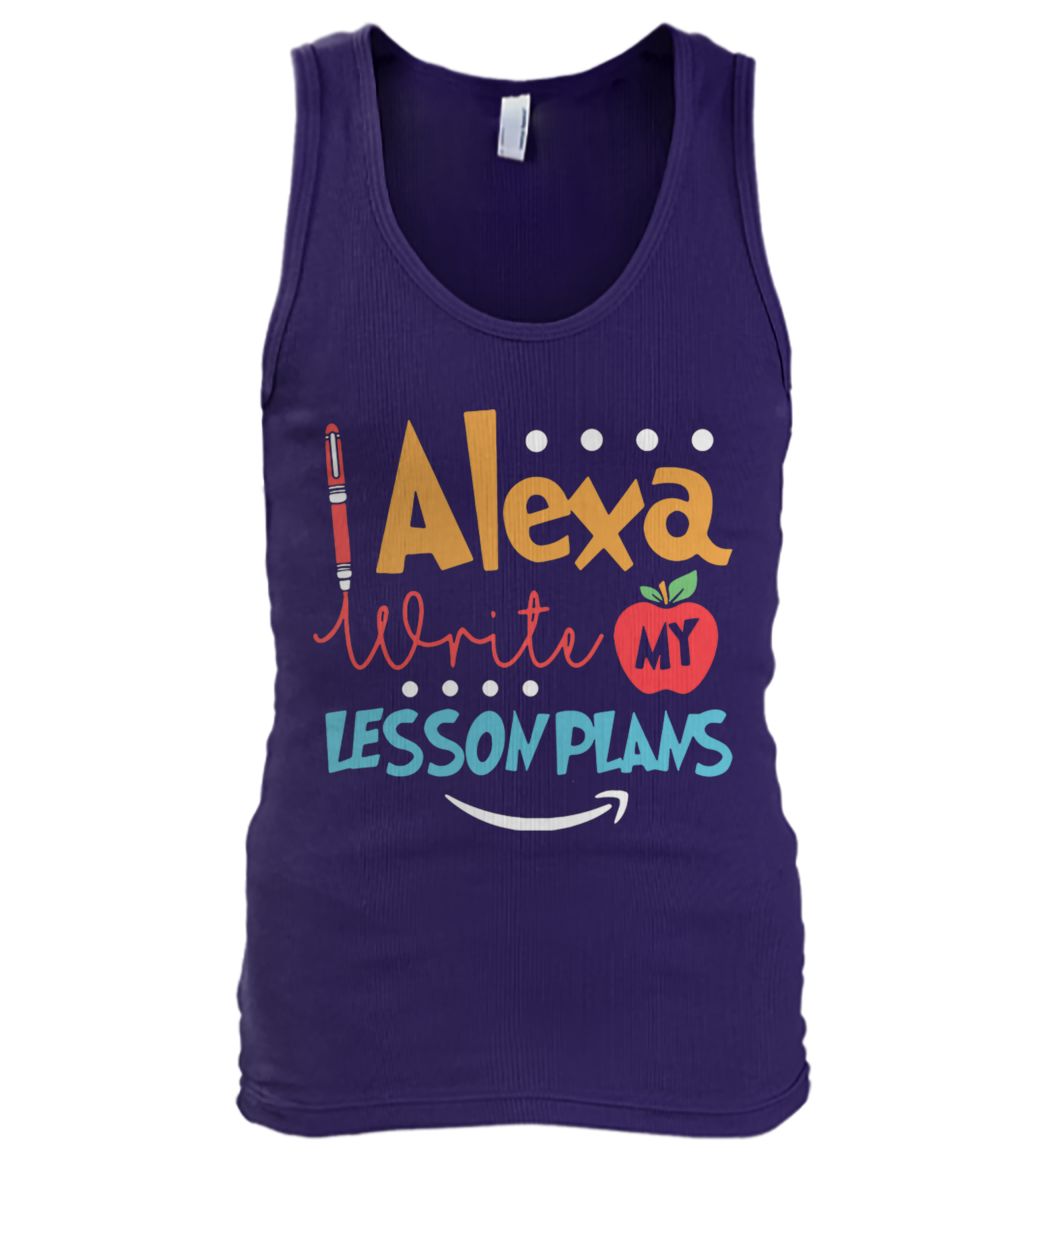 Alexa write my lesson plans men's tank top